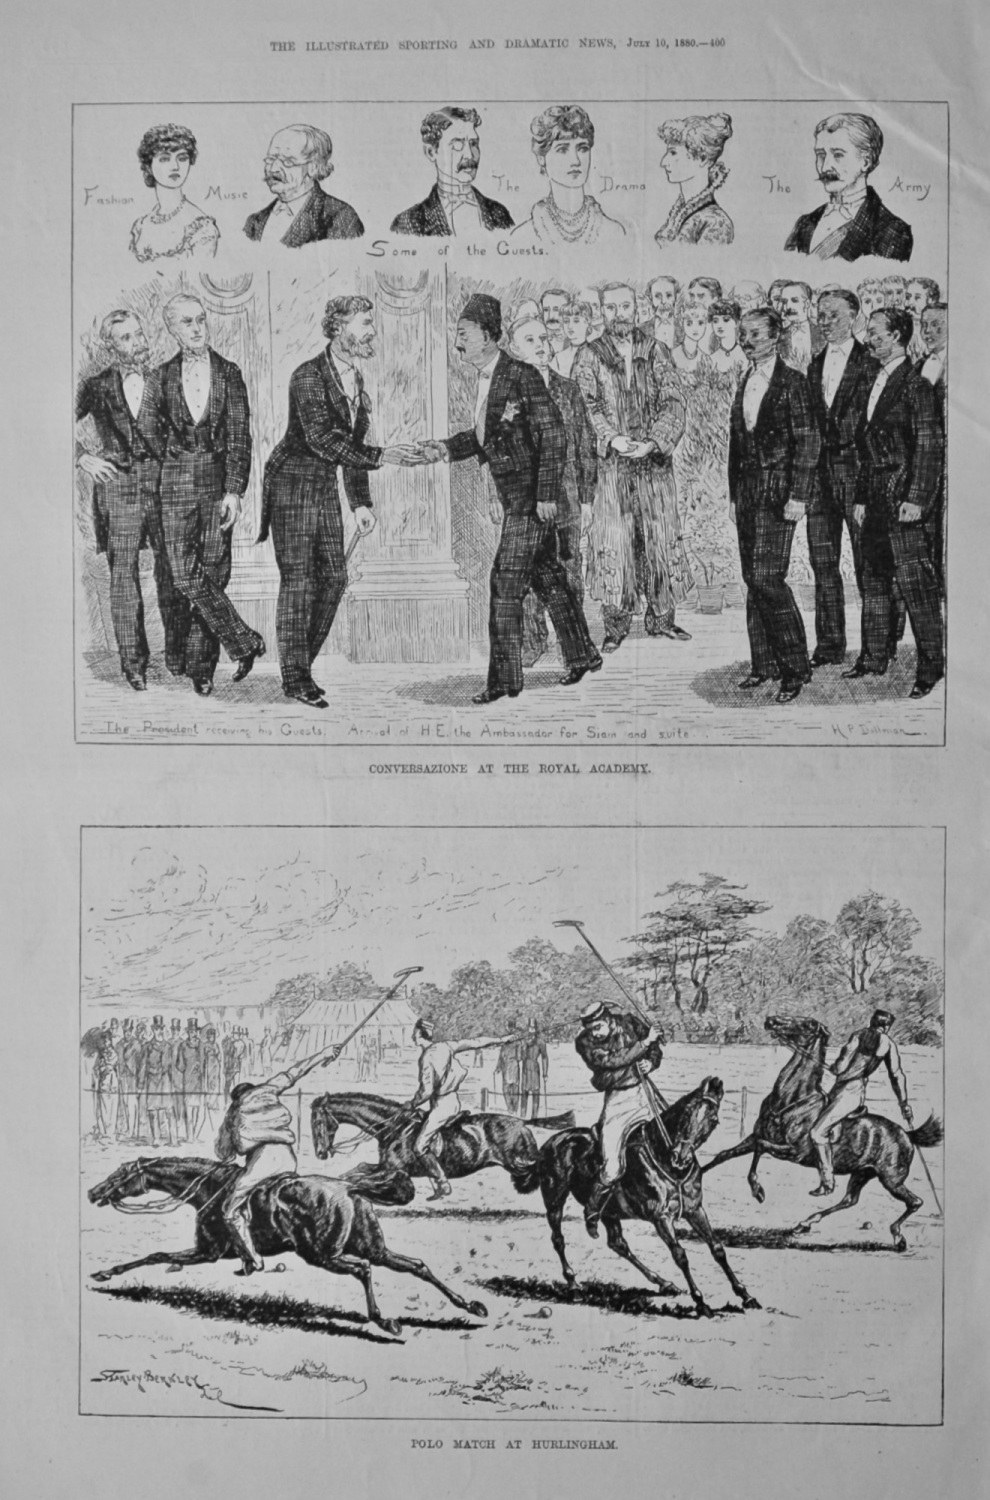 Polo Match at Hurlingham. 1880.